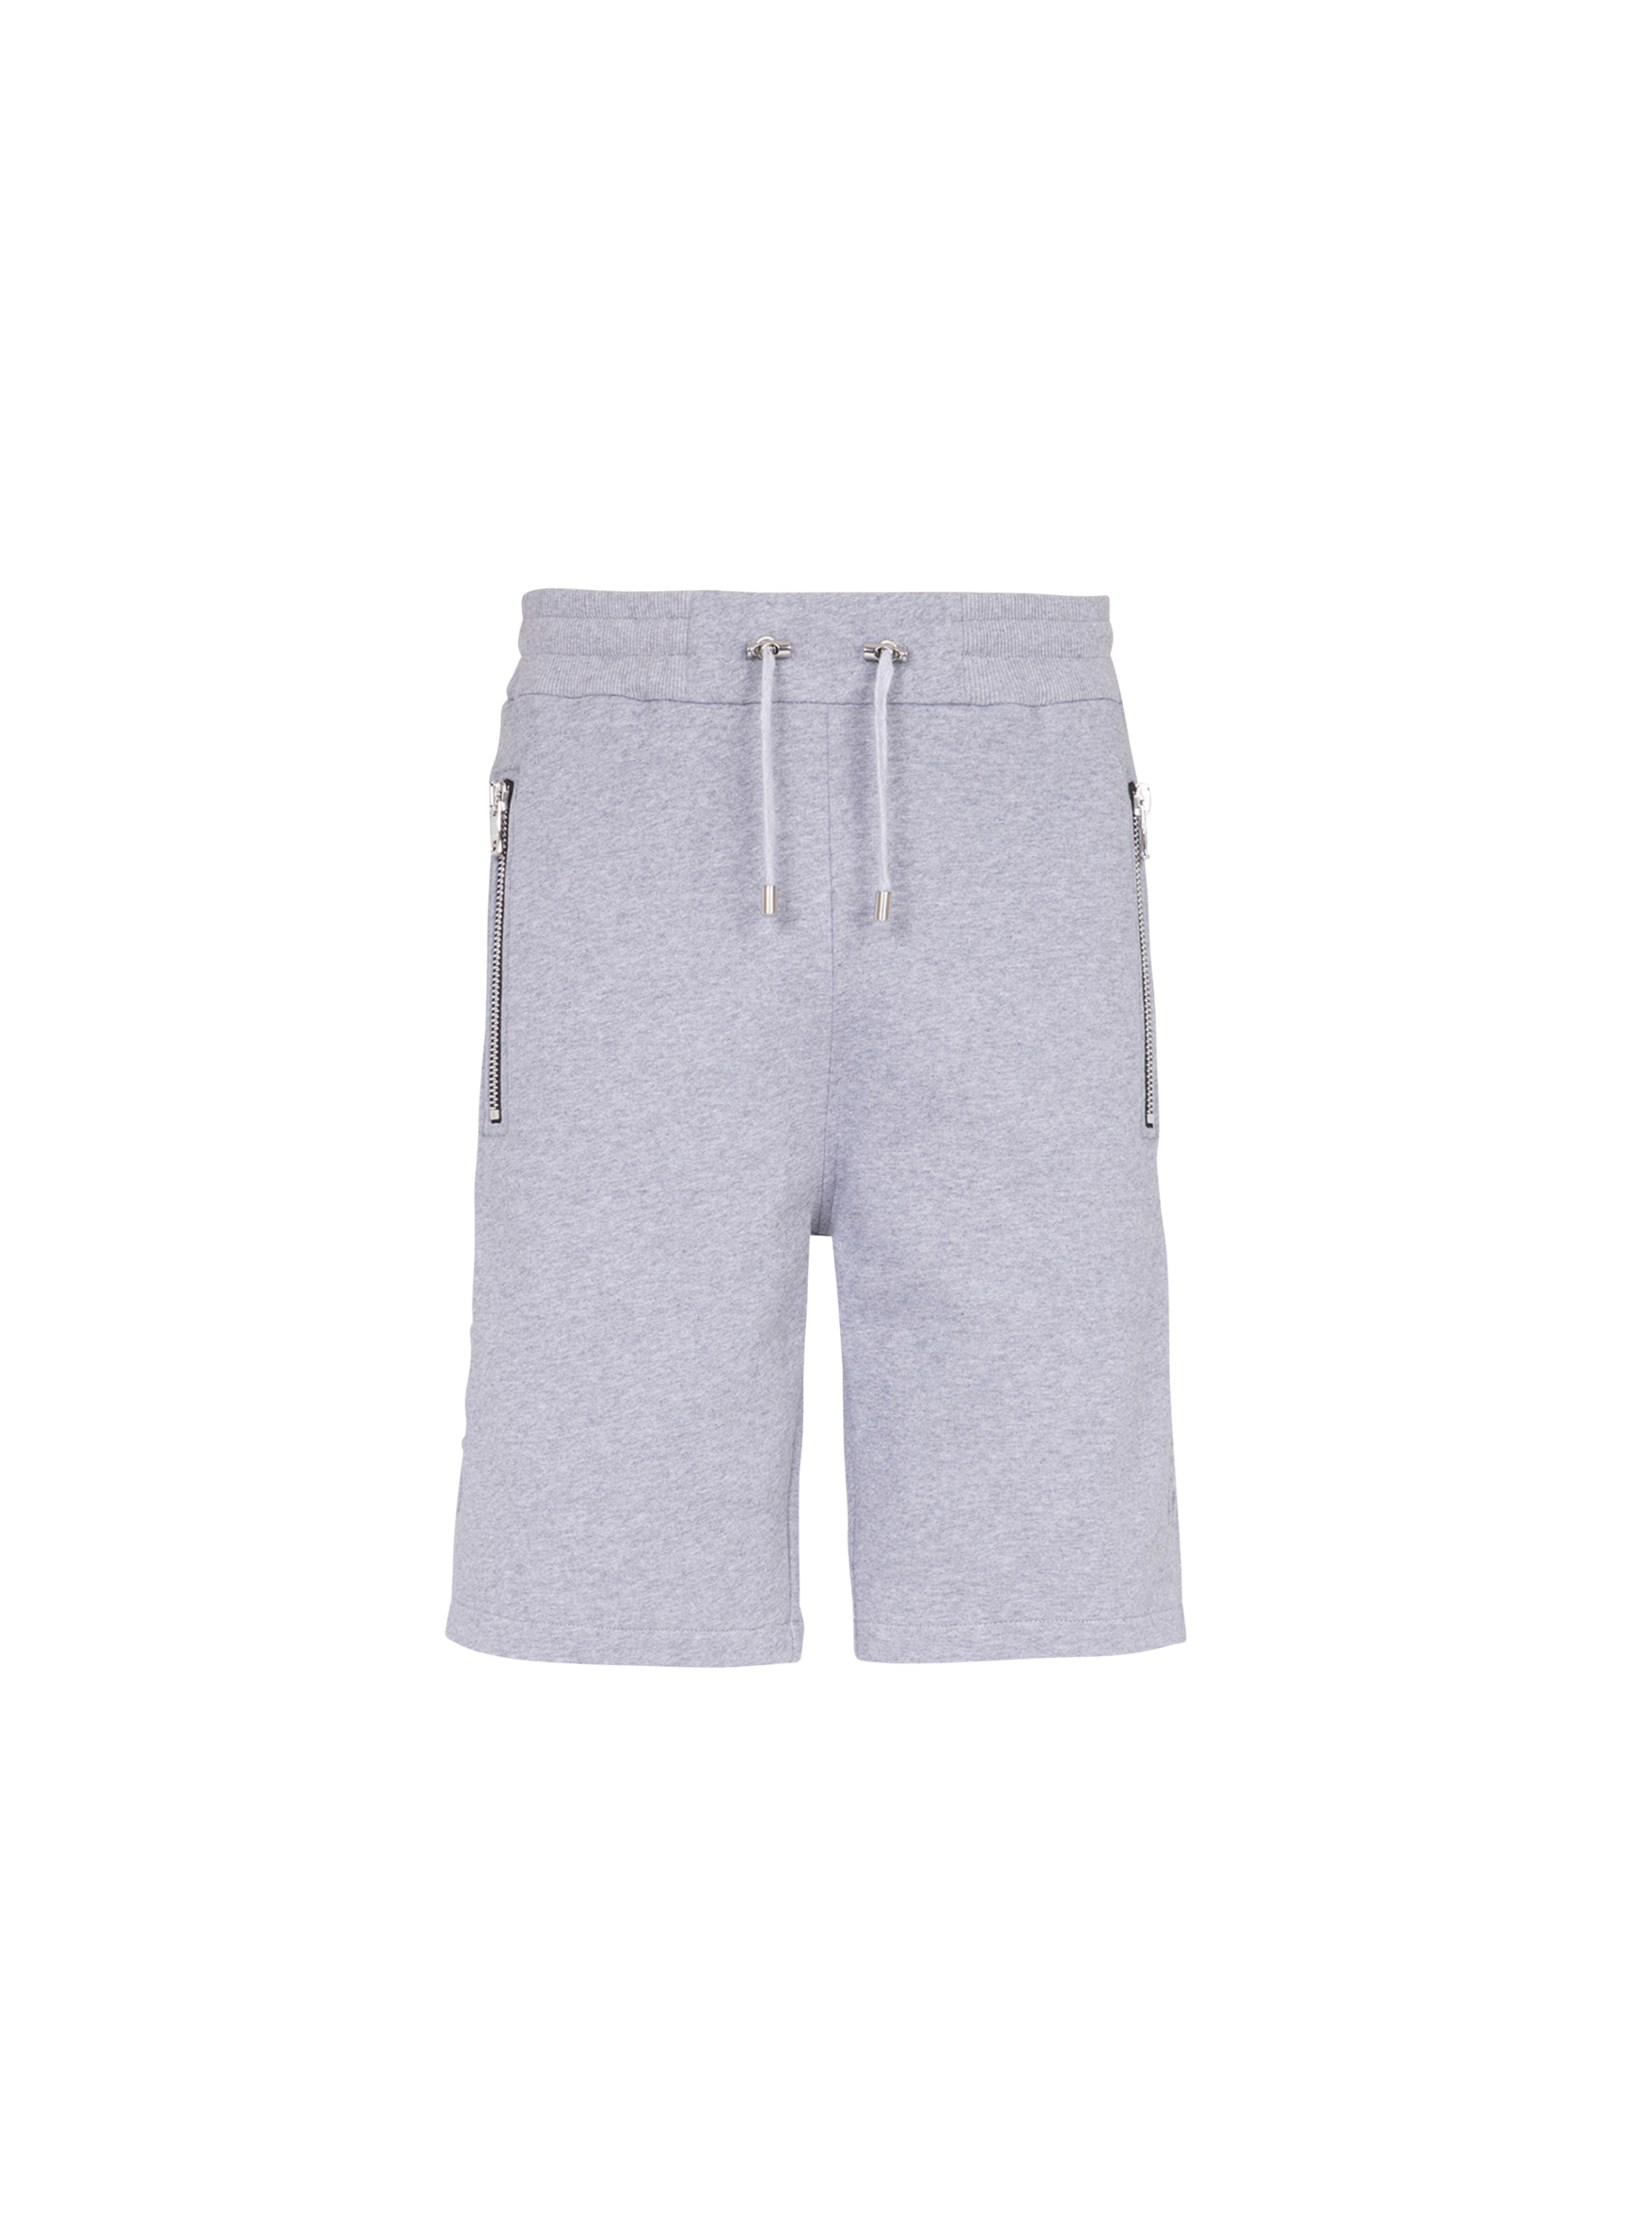 Cotton shorts with embossed Balmain logo, grey